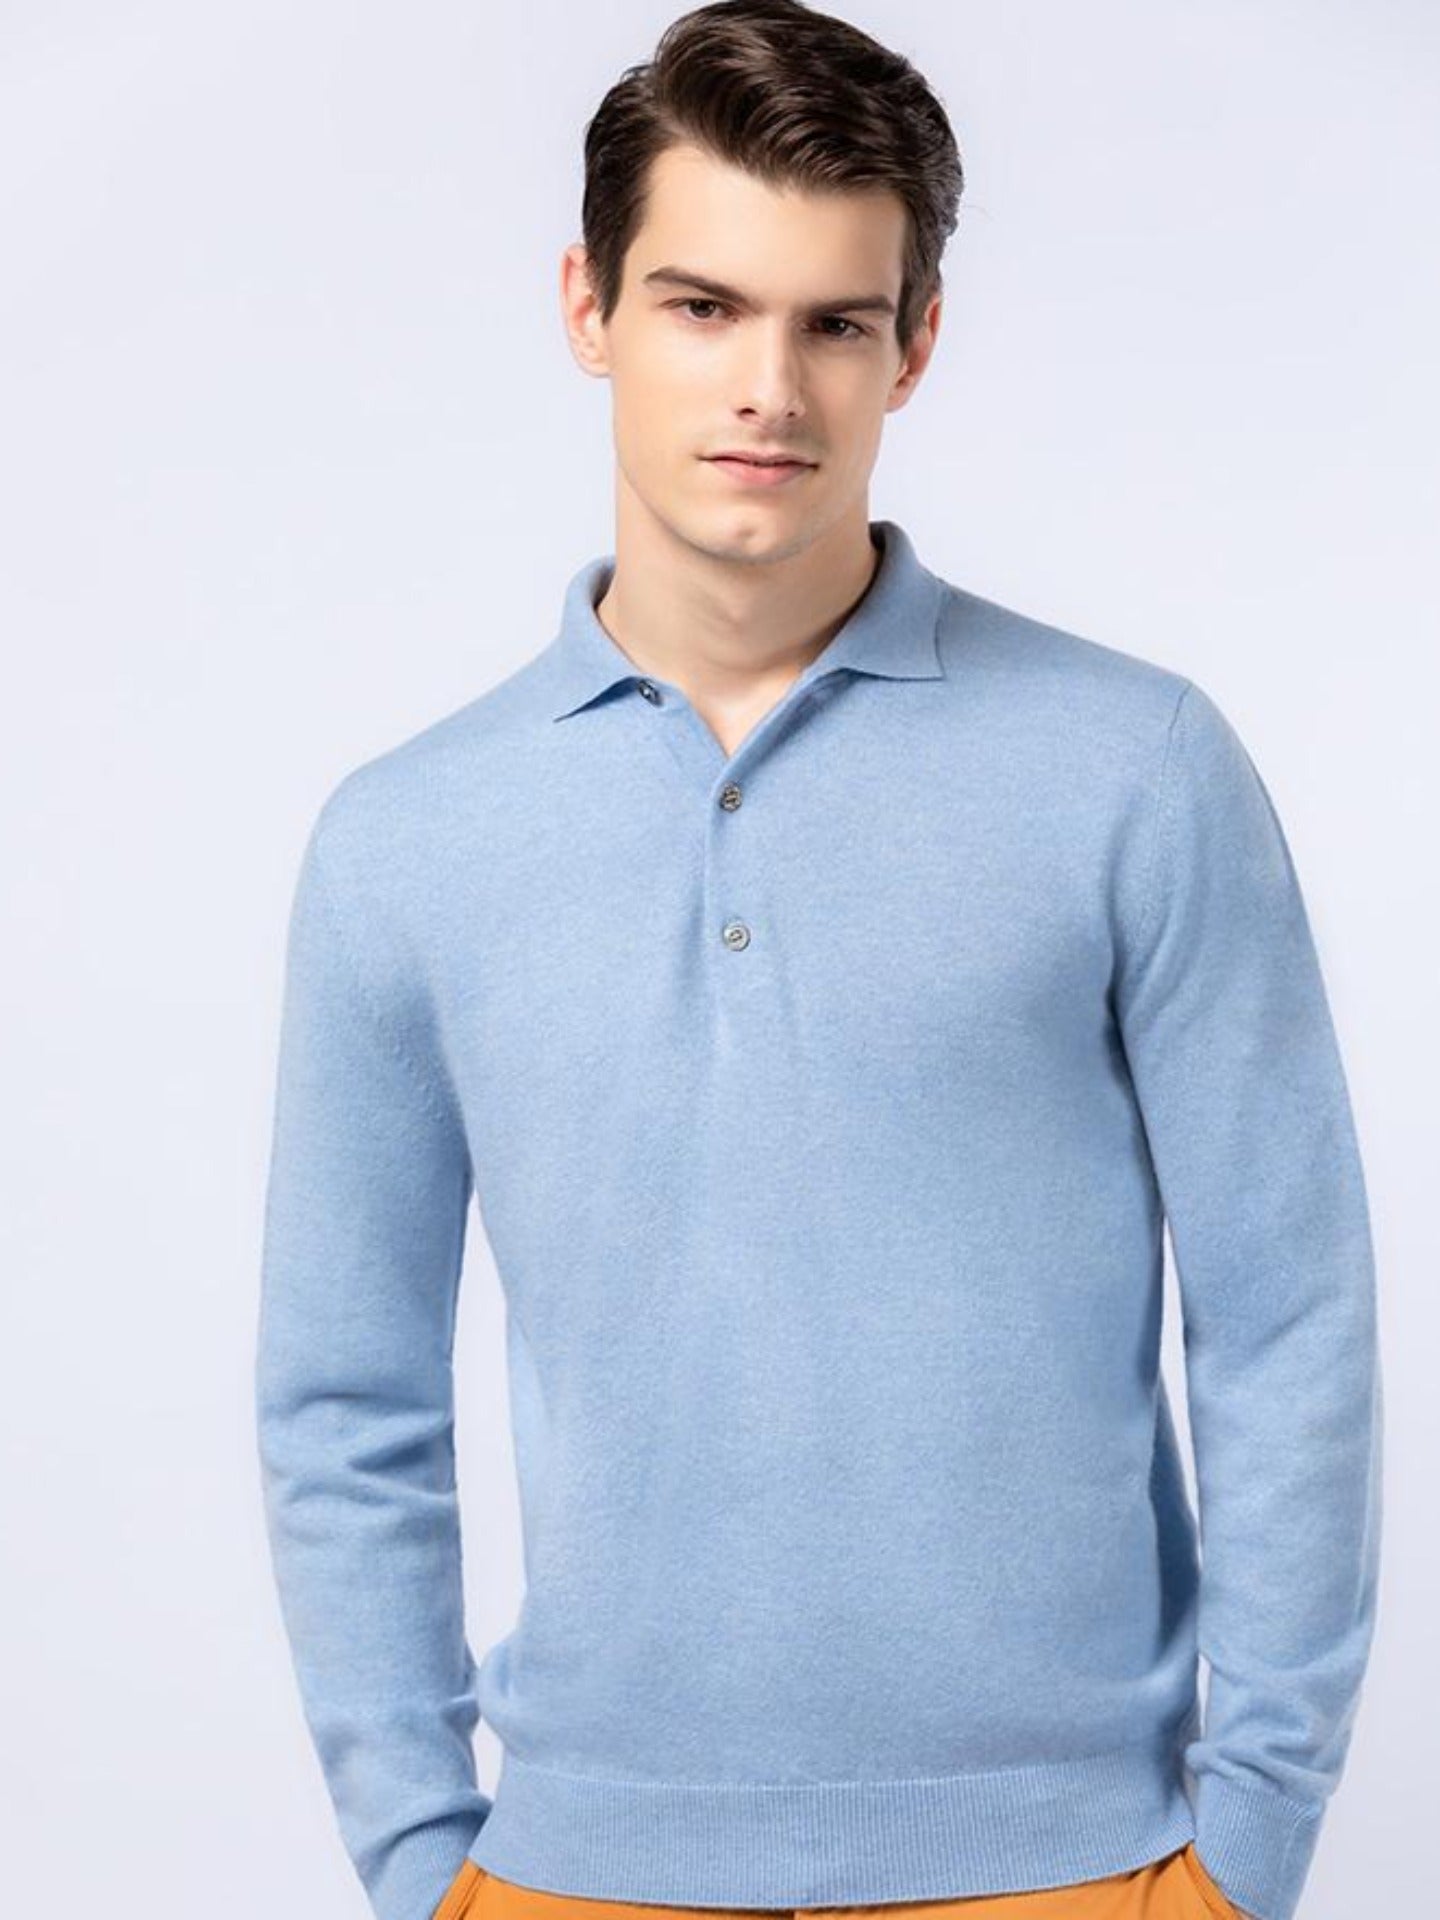 Men's Cashmere Polo Sweater Light Blue - Gobi Cashmere